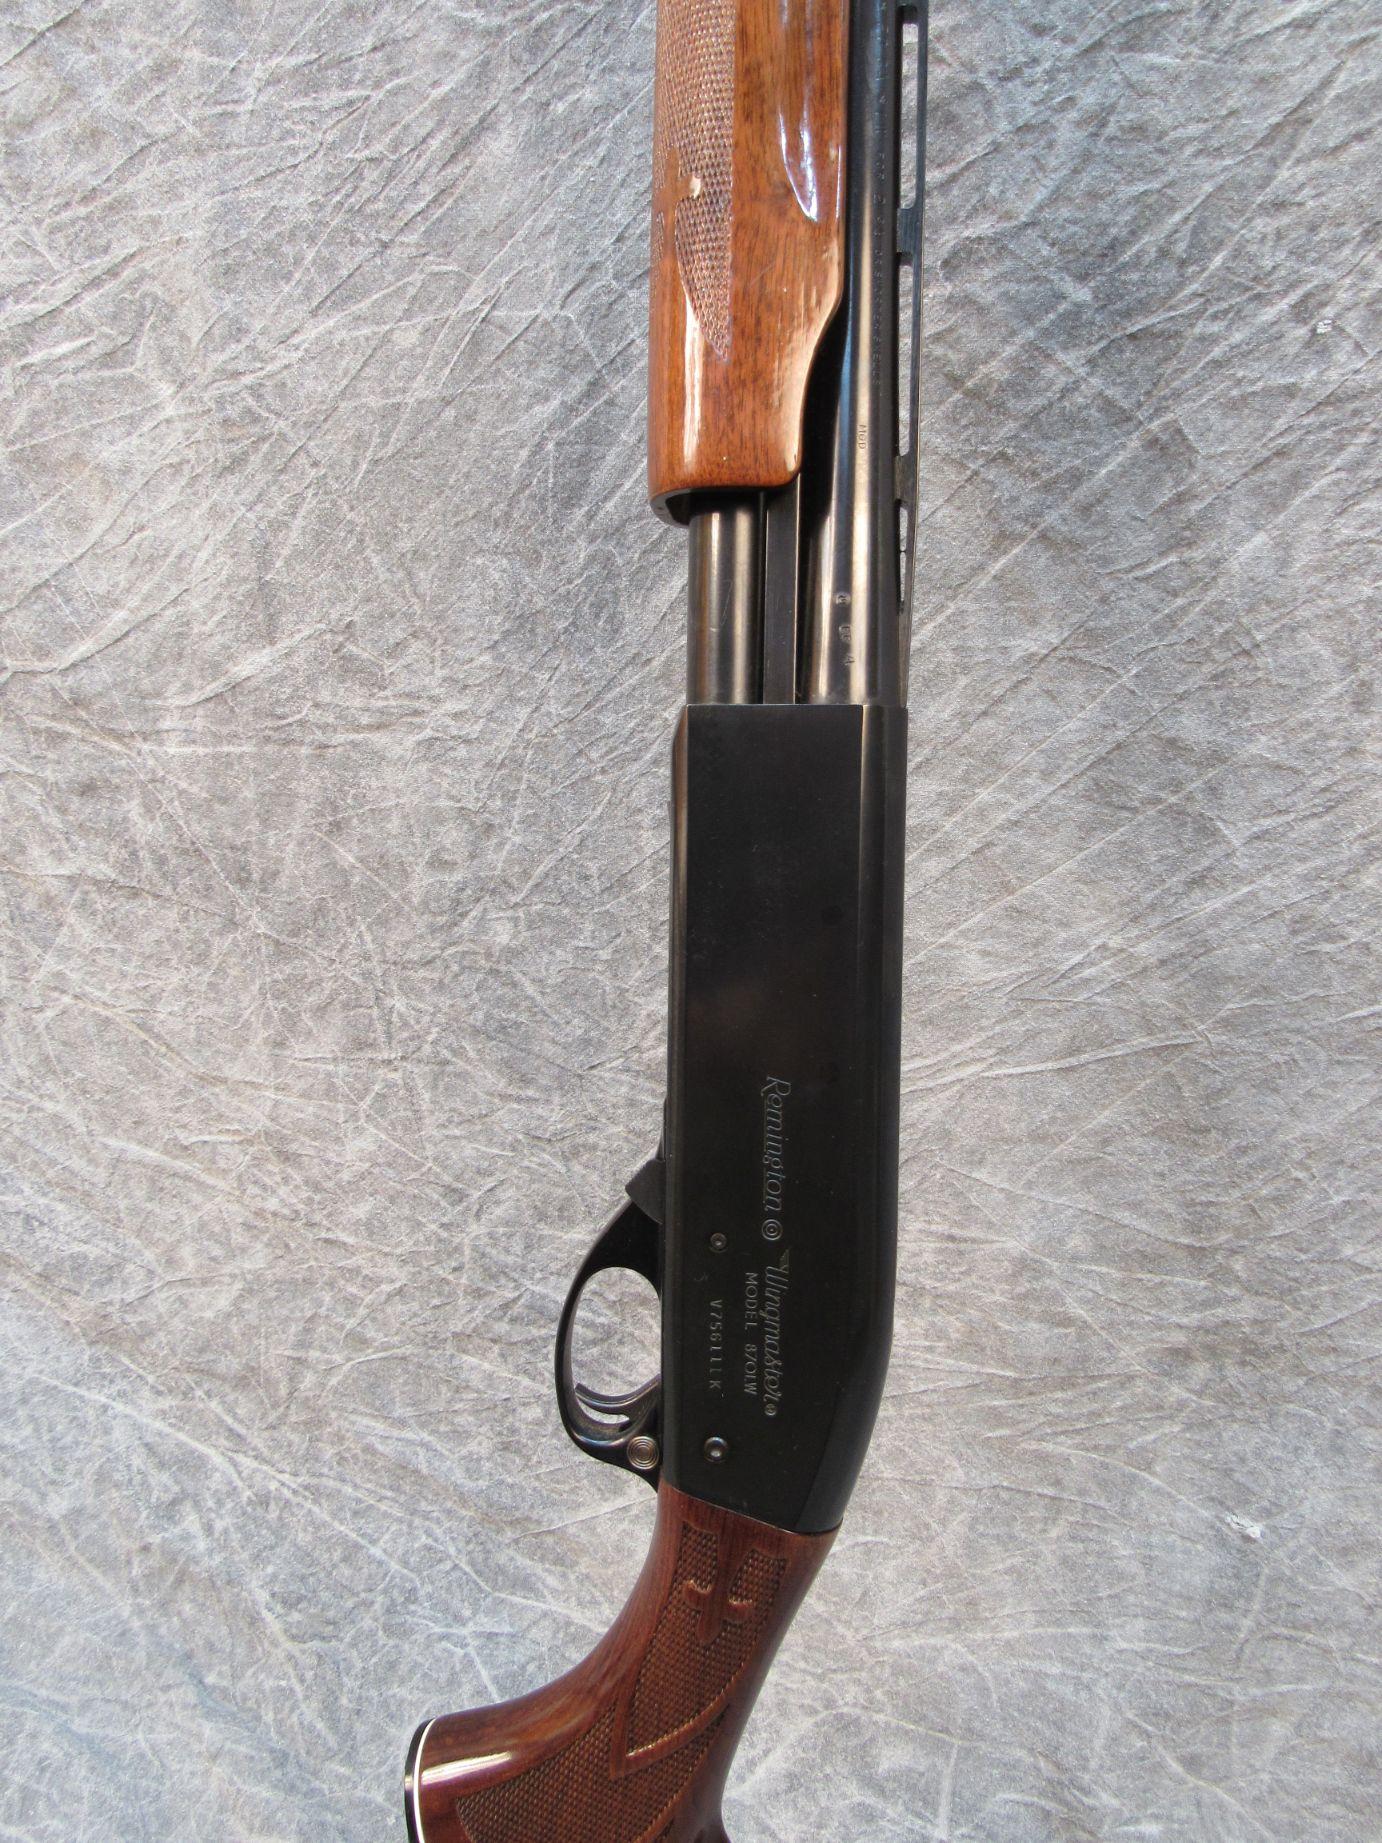 Remington Model 870LW Wingmaster Slide Action Shotgun